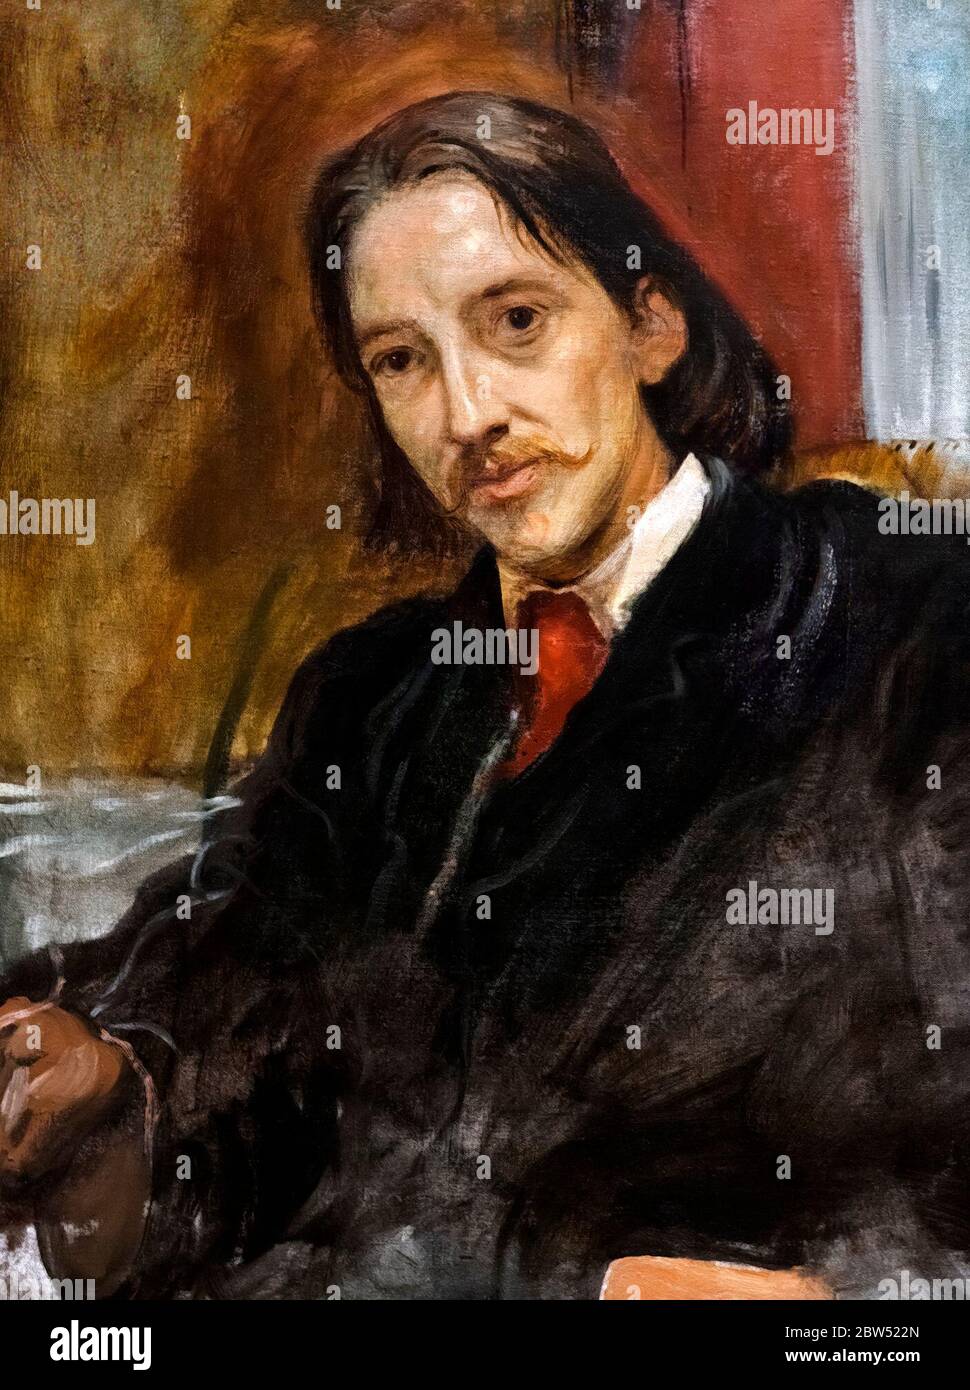 Robert Louis Stevenson. Portrait of the Scottish novelist, Robert Louis Stevenson (1850-1894), by Sir William Blake Richmond, oil on canvas, 1887. Stock Photo